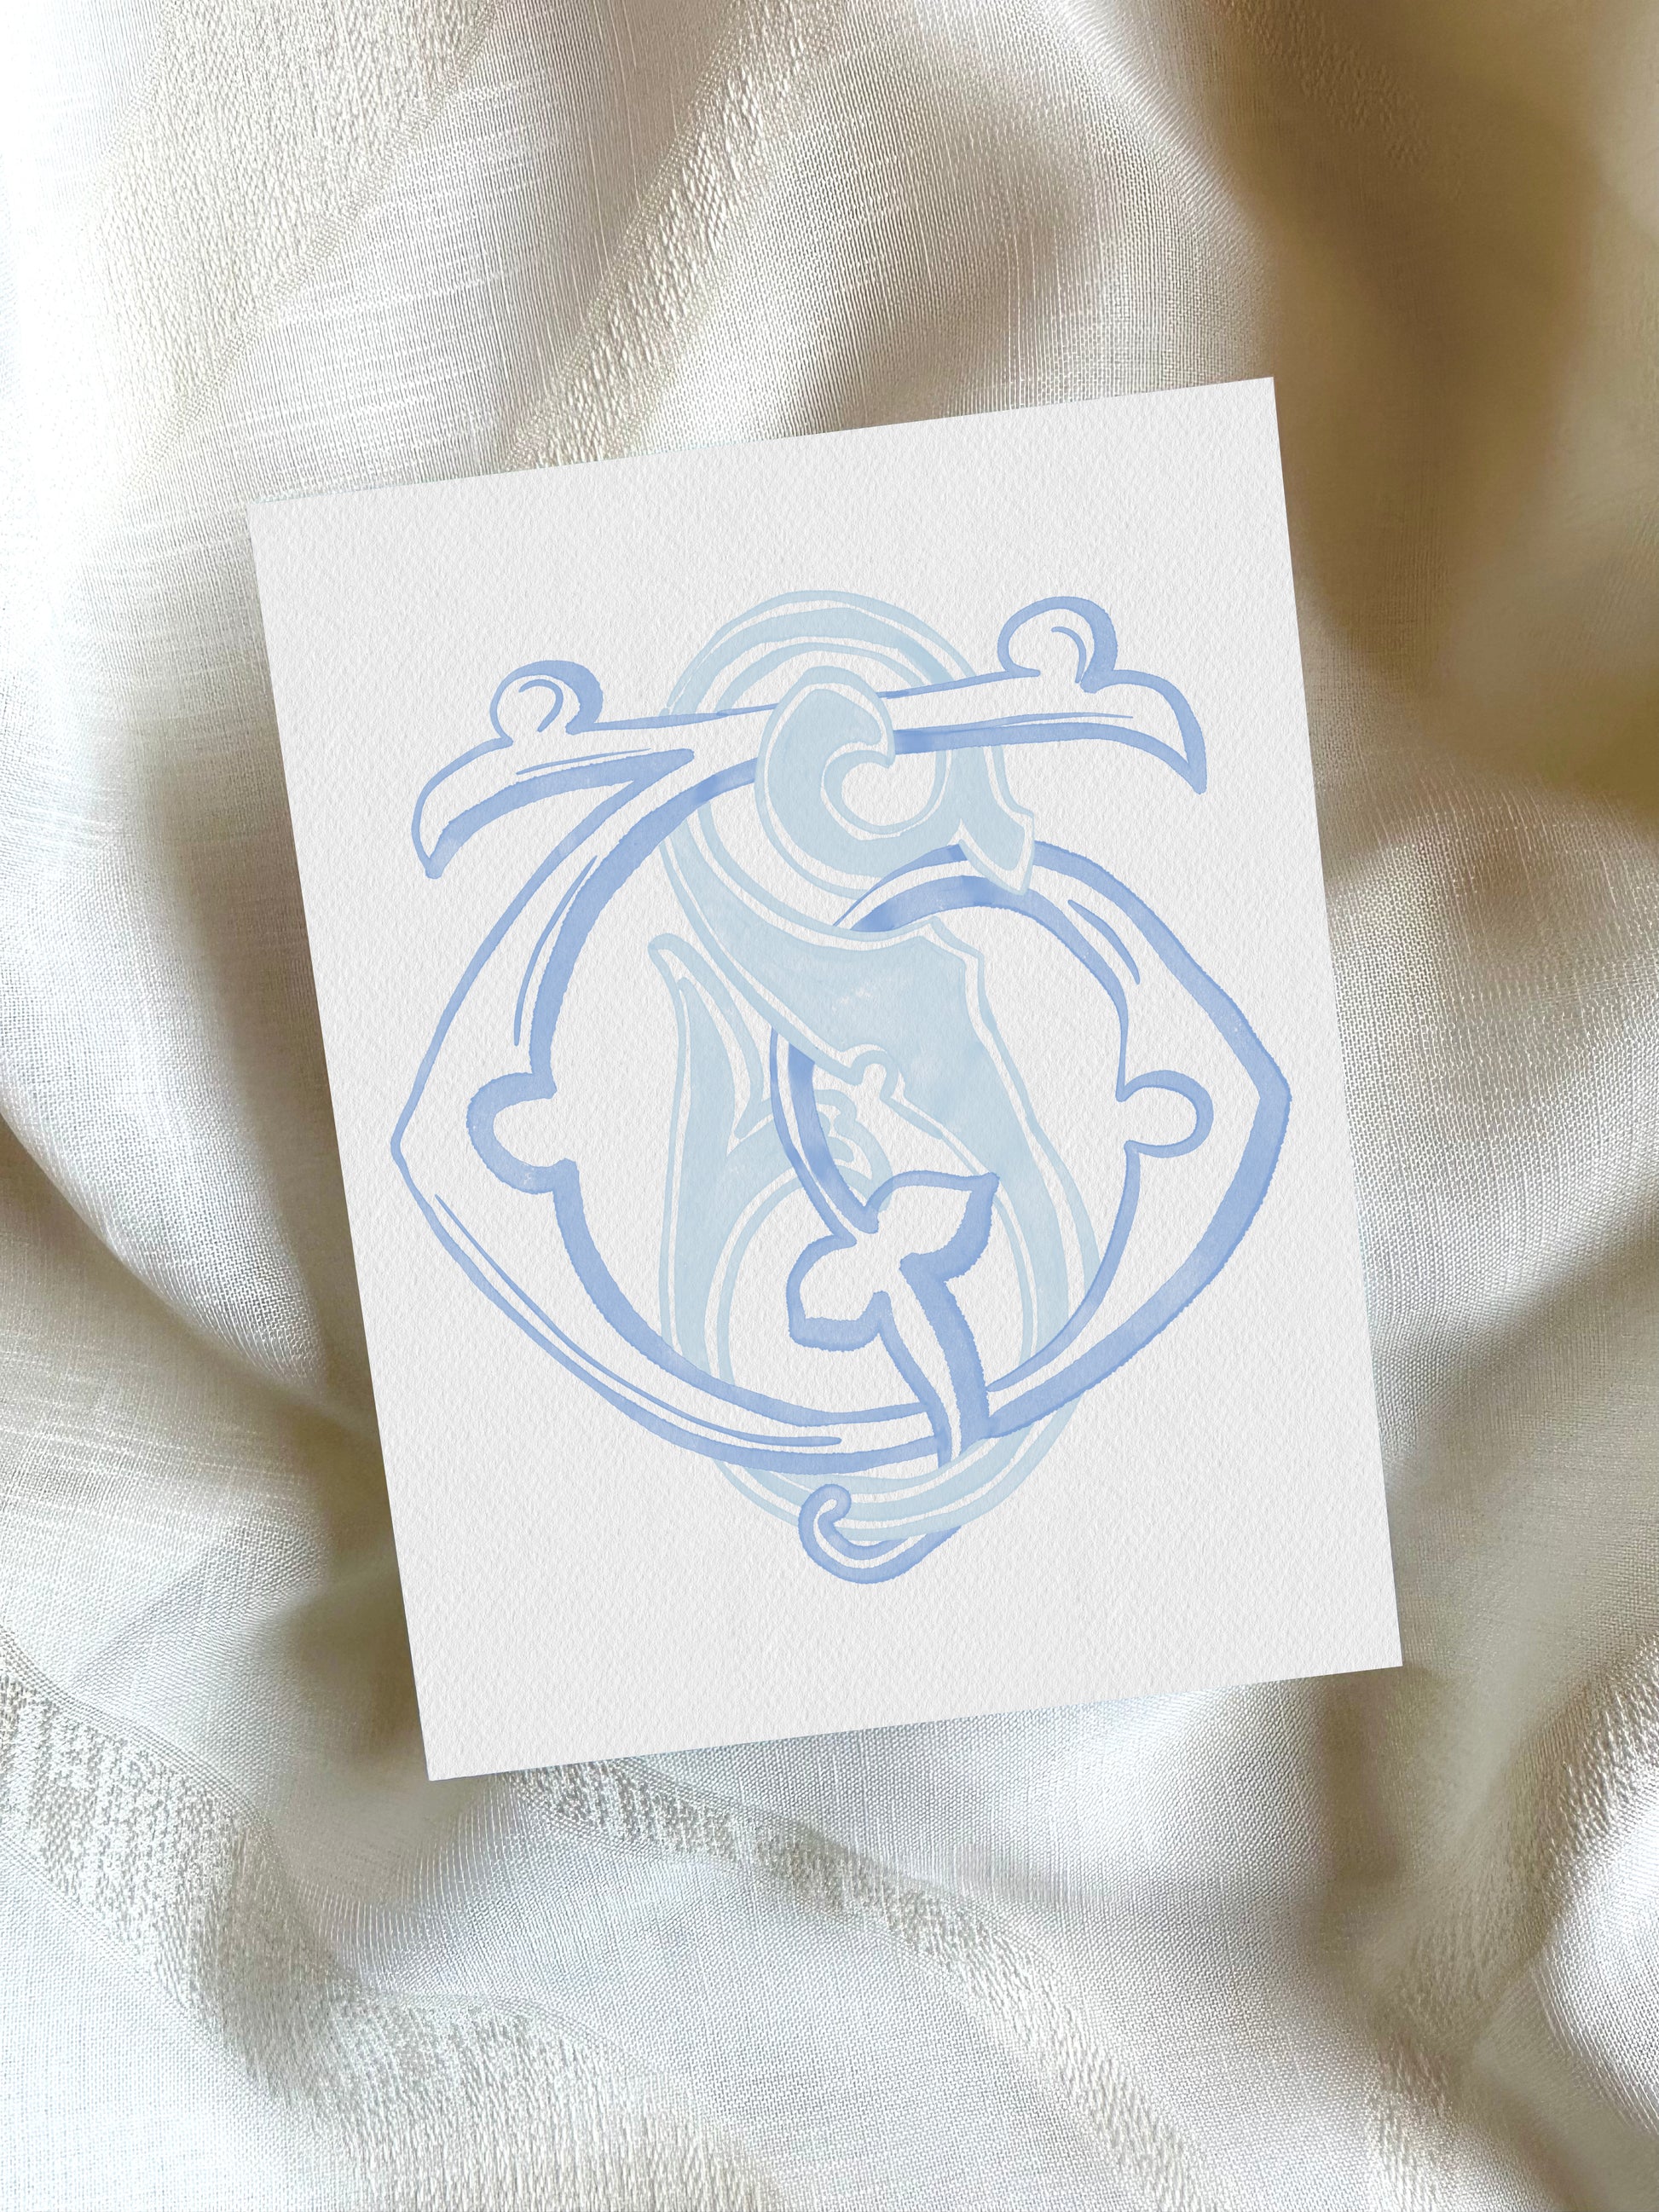 2 Letter Monogram with Letters ST TS | Digital Download - Wedding Monogram SVG, Personal Logo, Wedding Logo for Wedding Invitations The Wedding Crest Lab